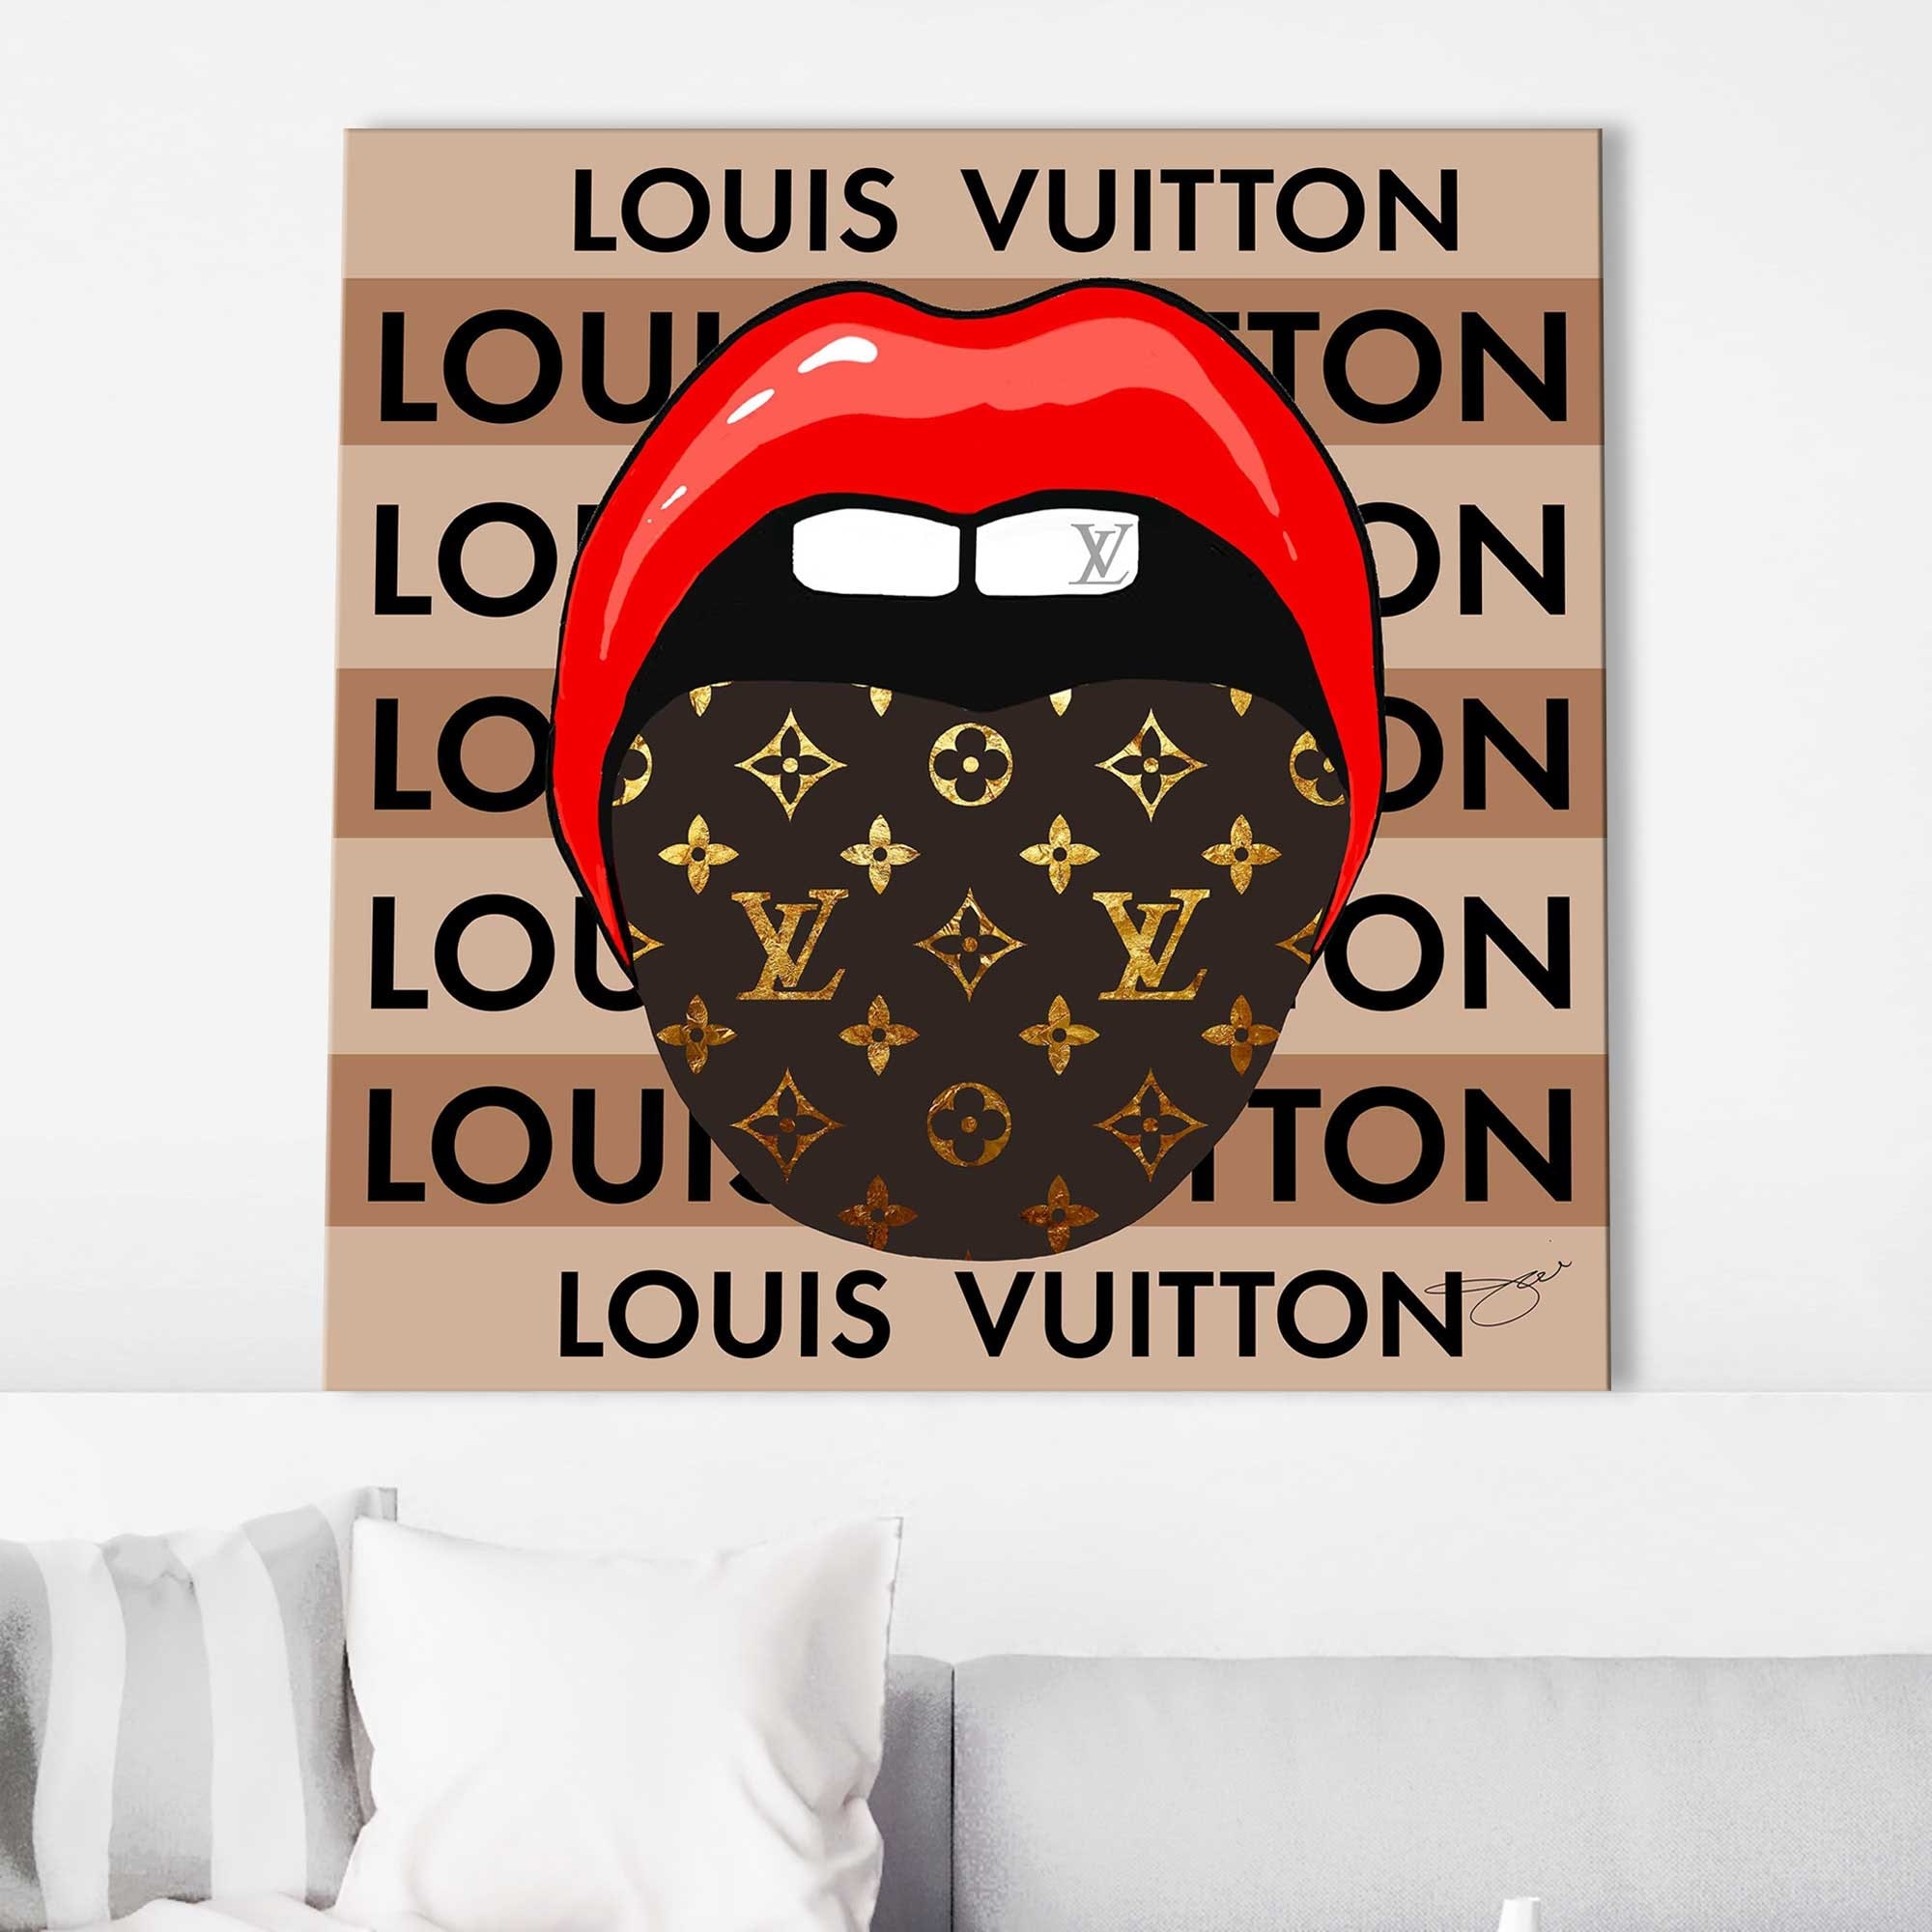 Louis Vuitton Tongue by Jodi Print on Canvas - On Sale - Bed Bath